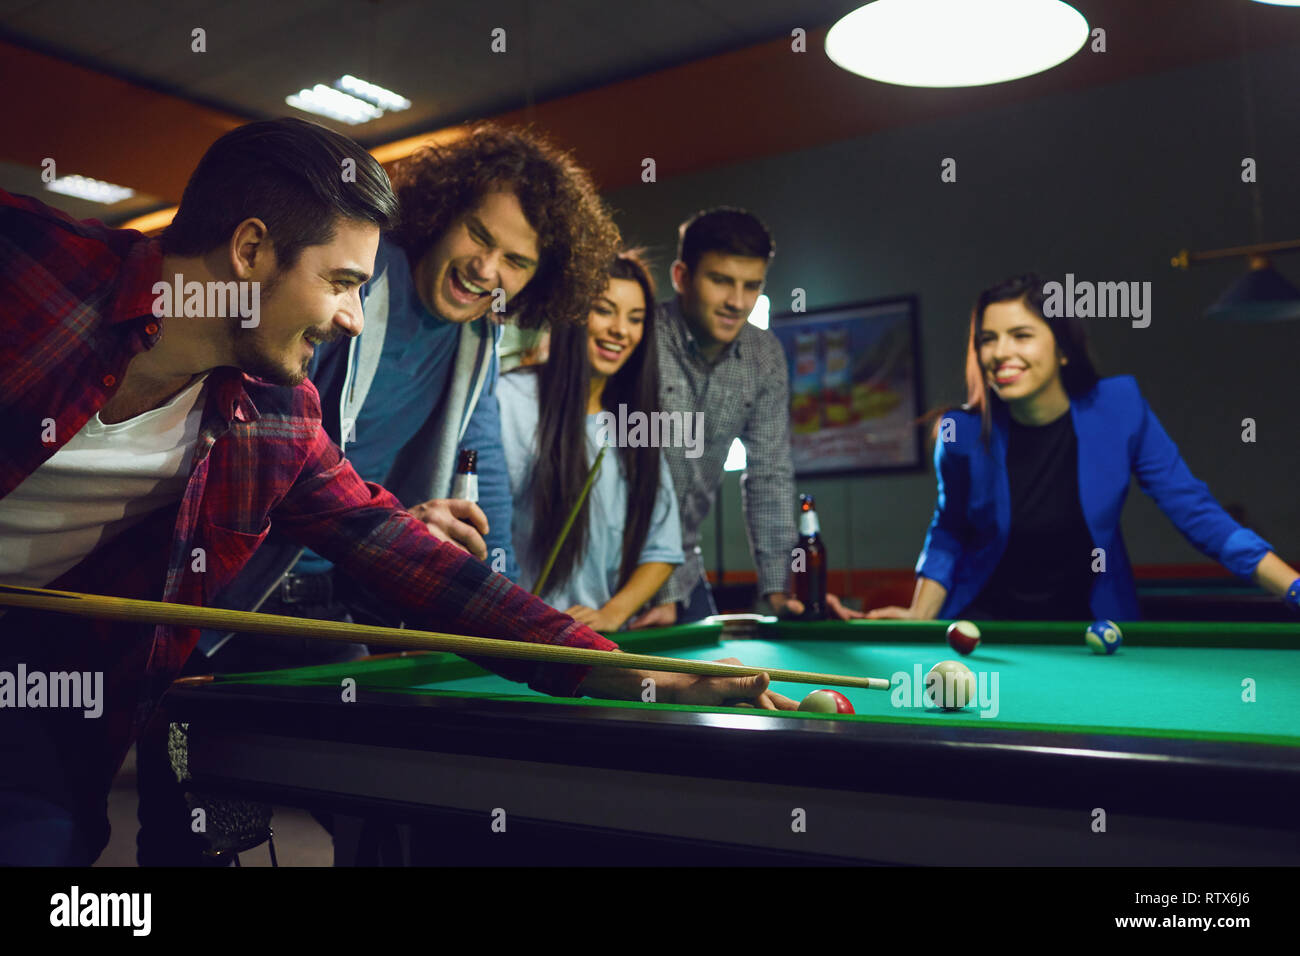 Friends play billiards in bar. Stock Photo